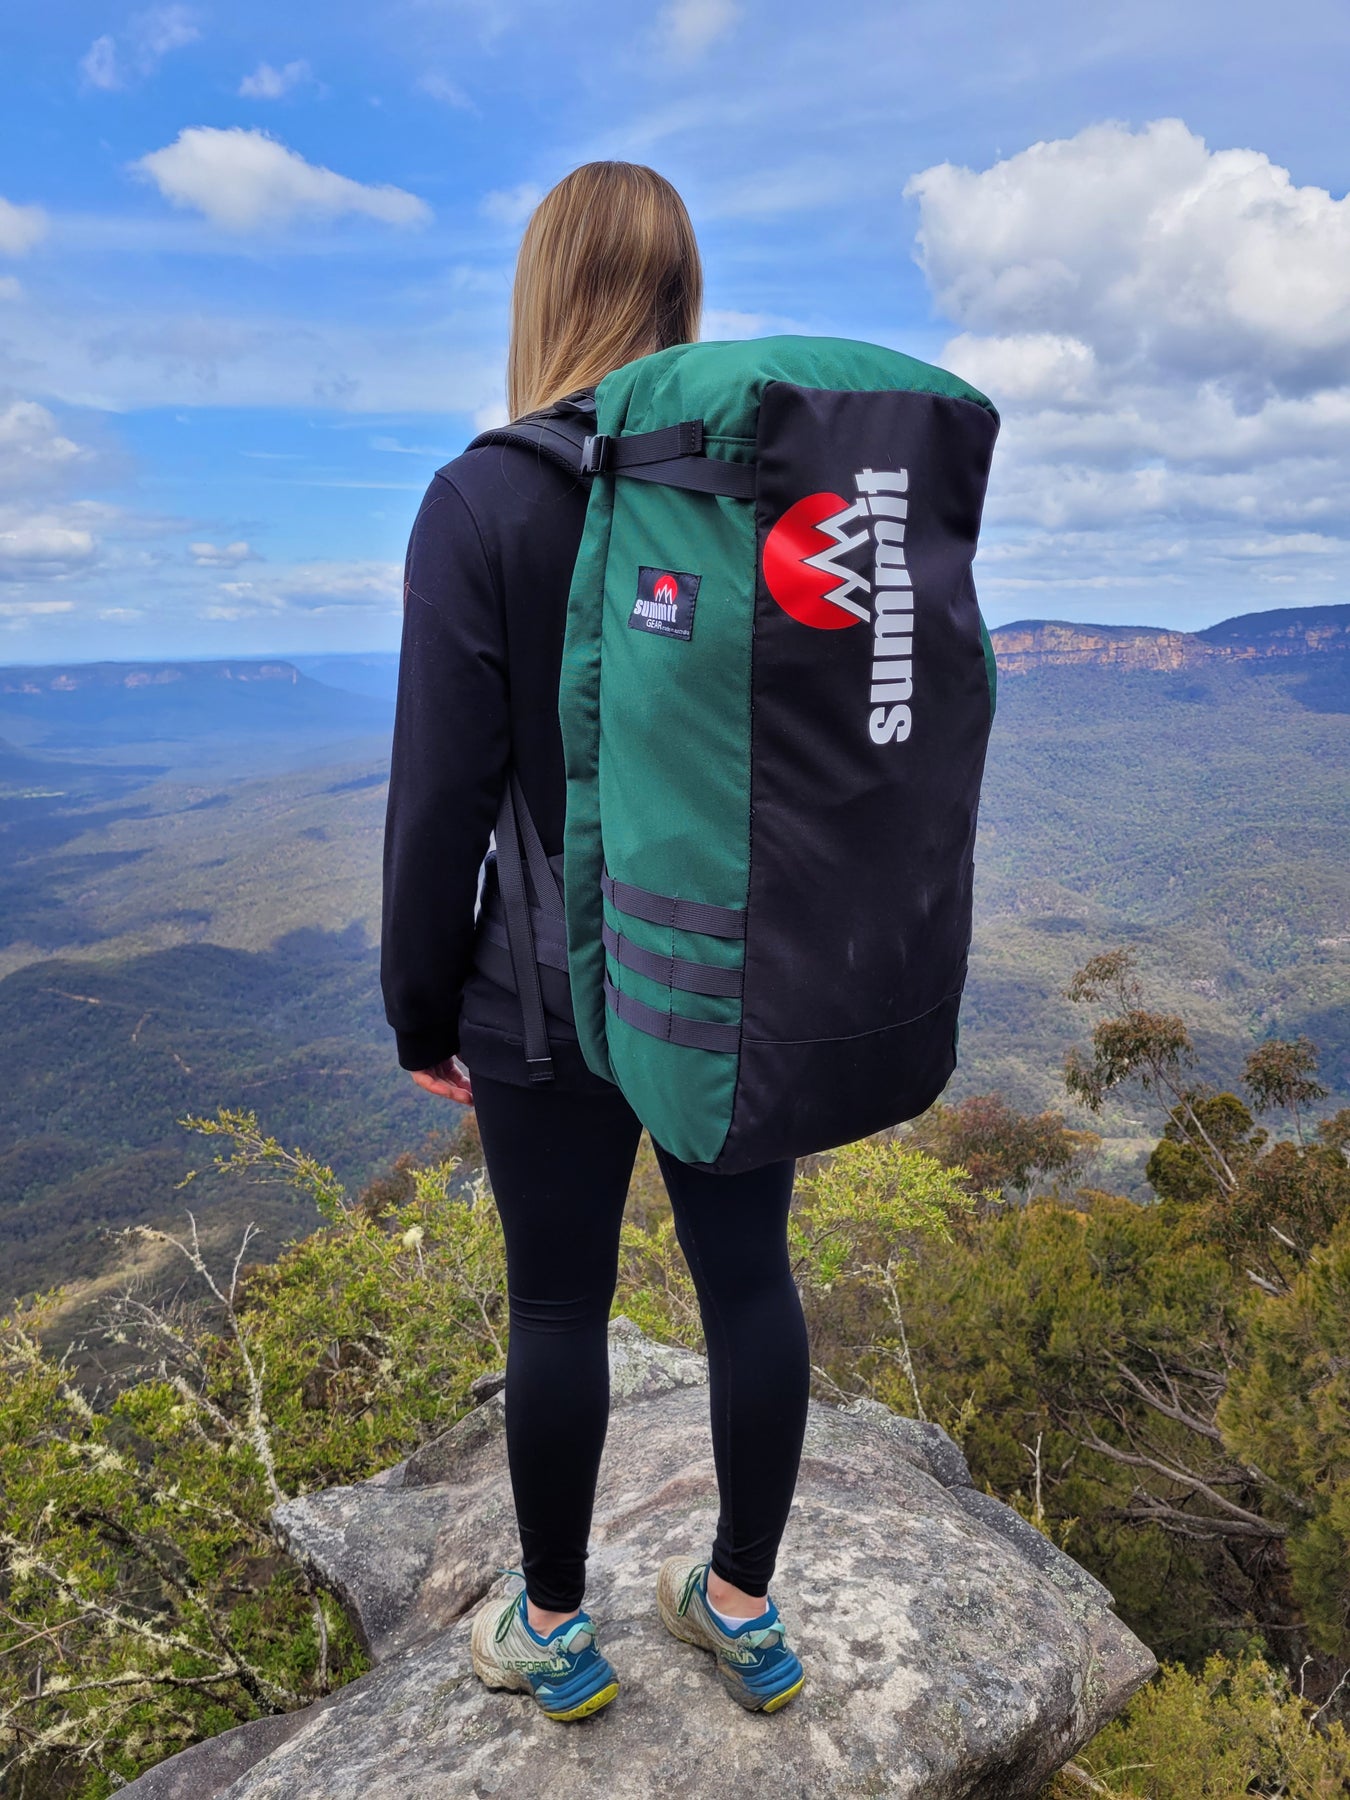 Wild Country Stamina Gear Bag crag climbing backpack